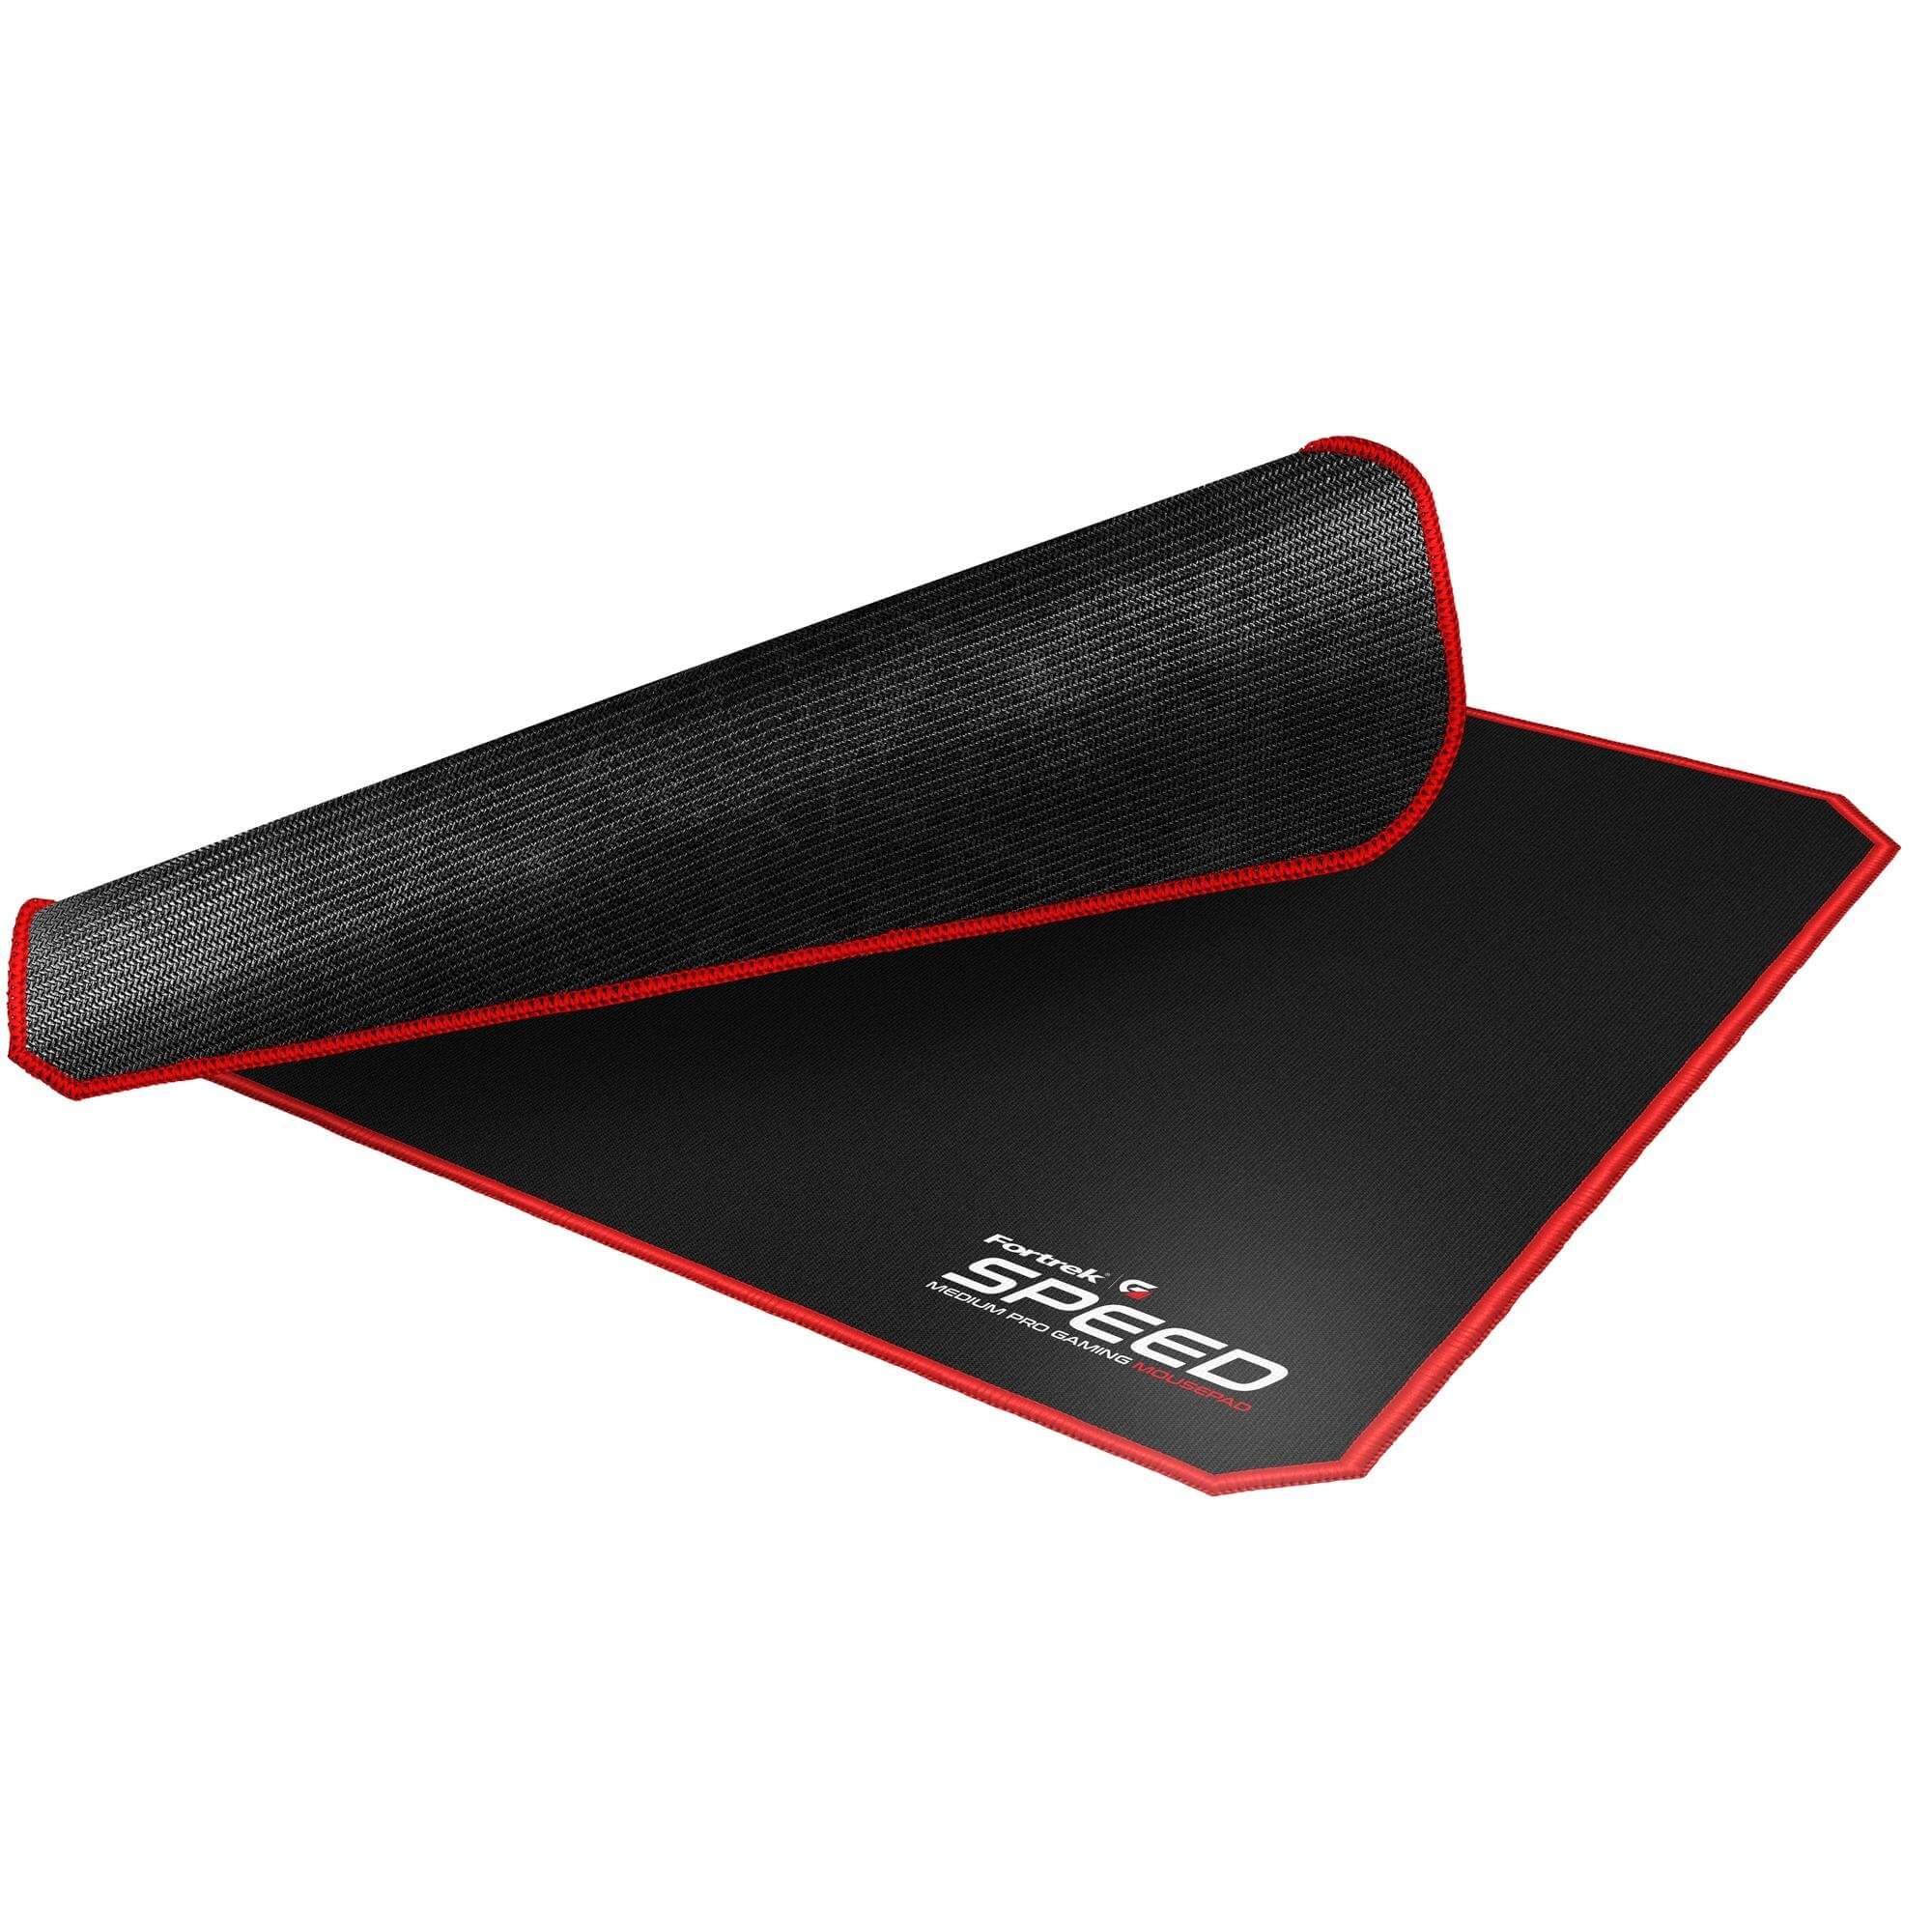 Mouse Pad Fortrek Gamer SPEED MPG 101 Vermelho (320x240mm)  